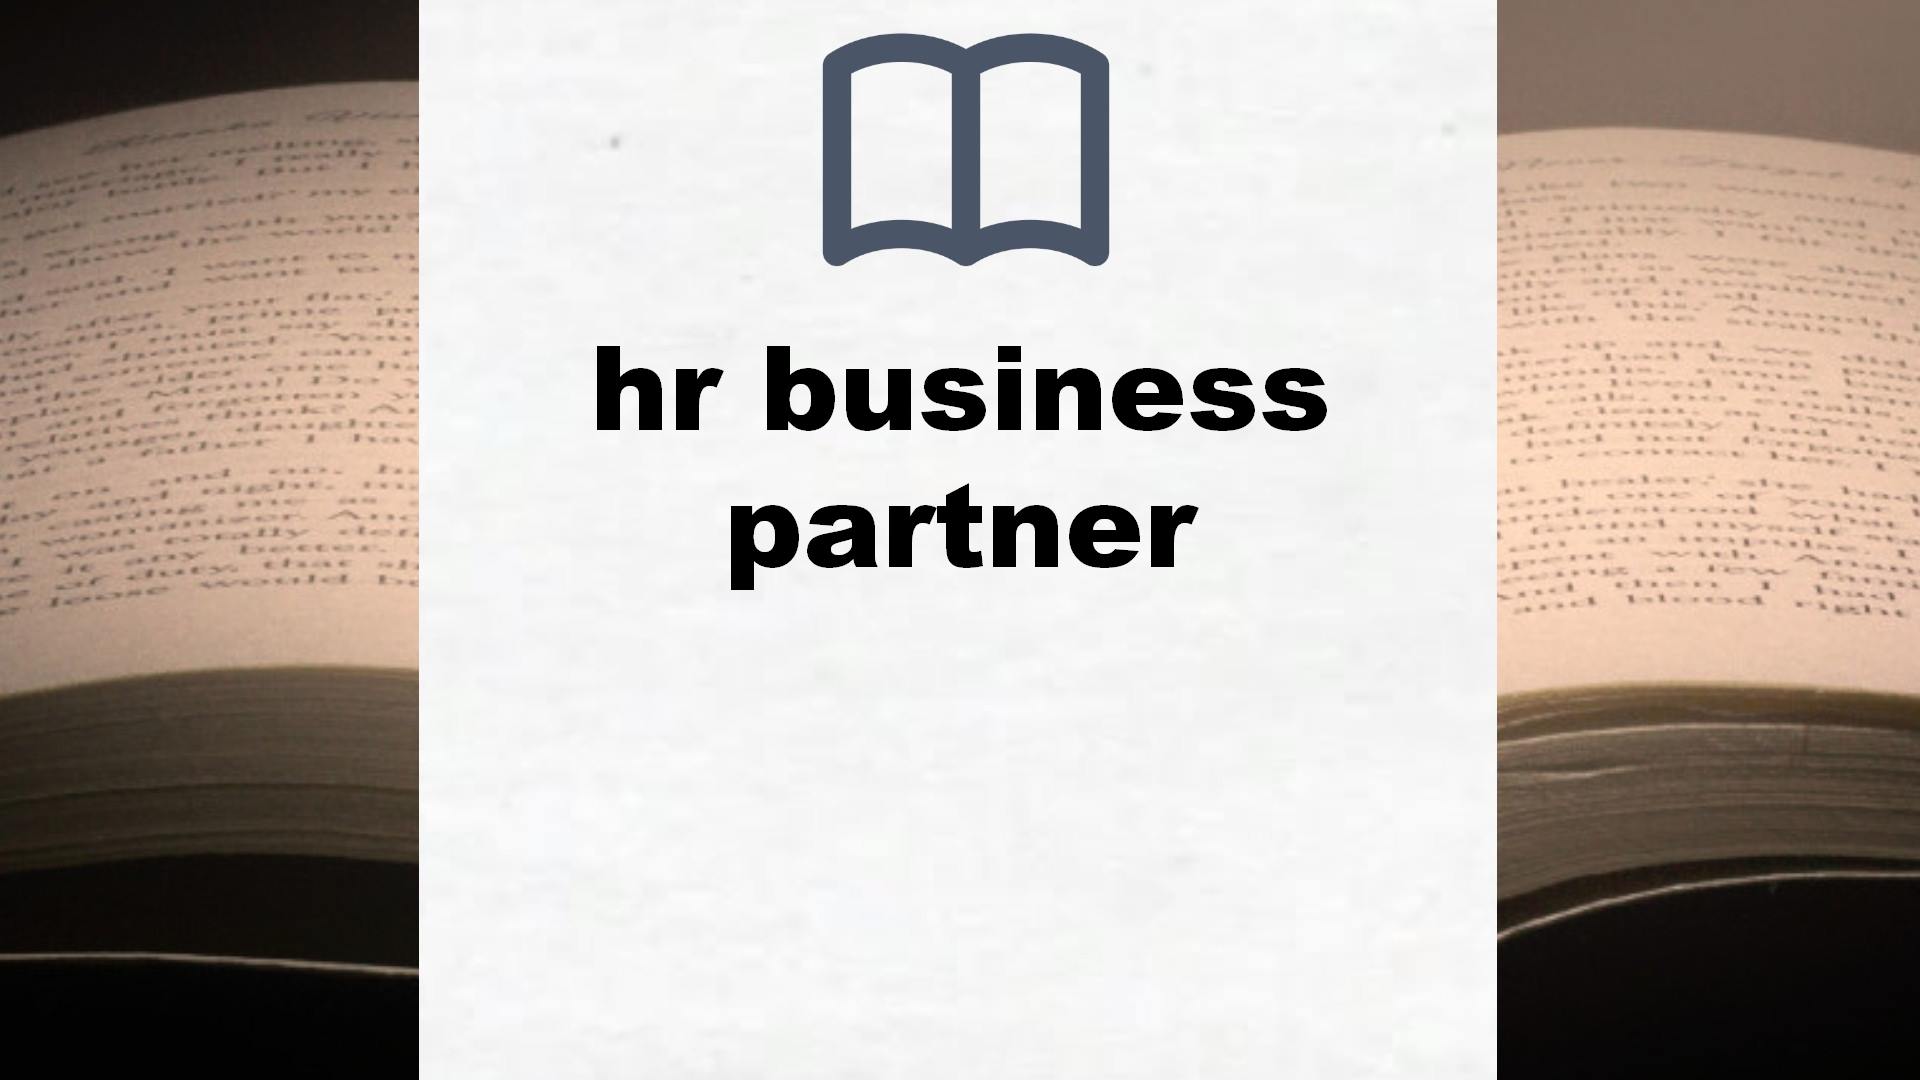 Libros sobre hr business partner